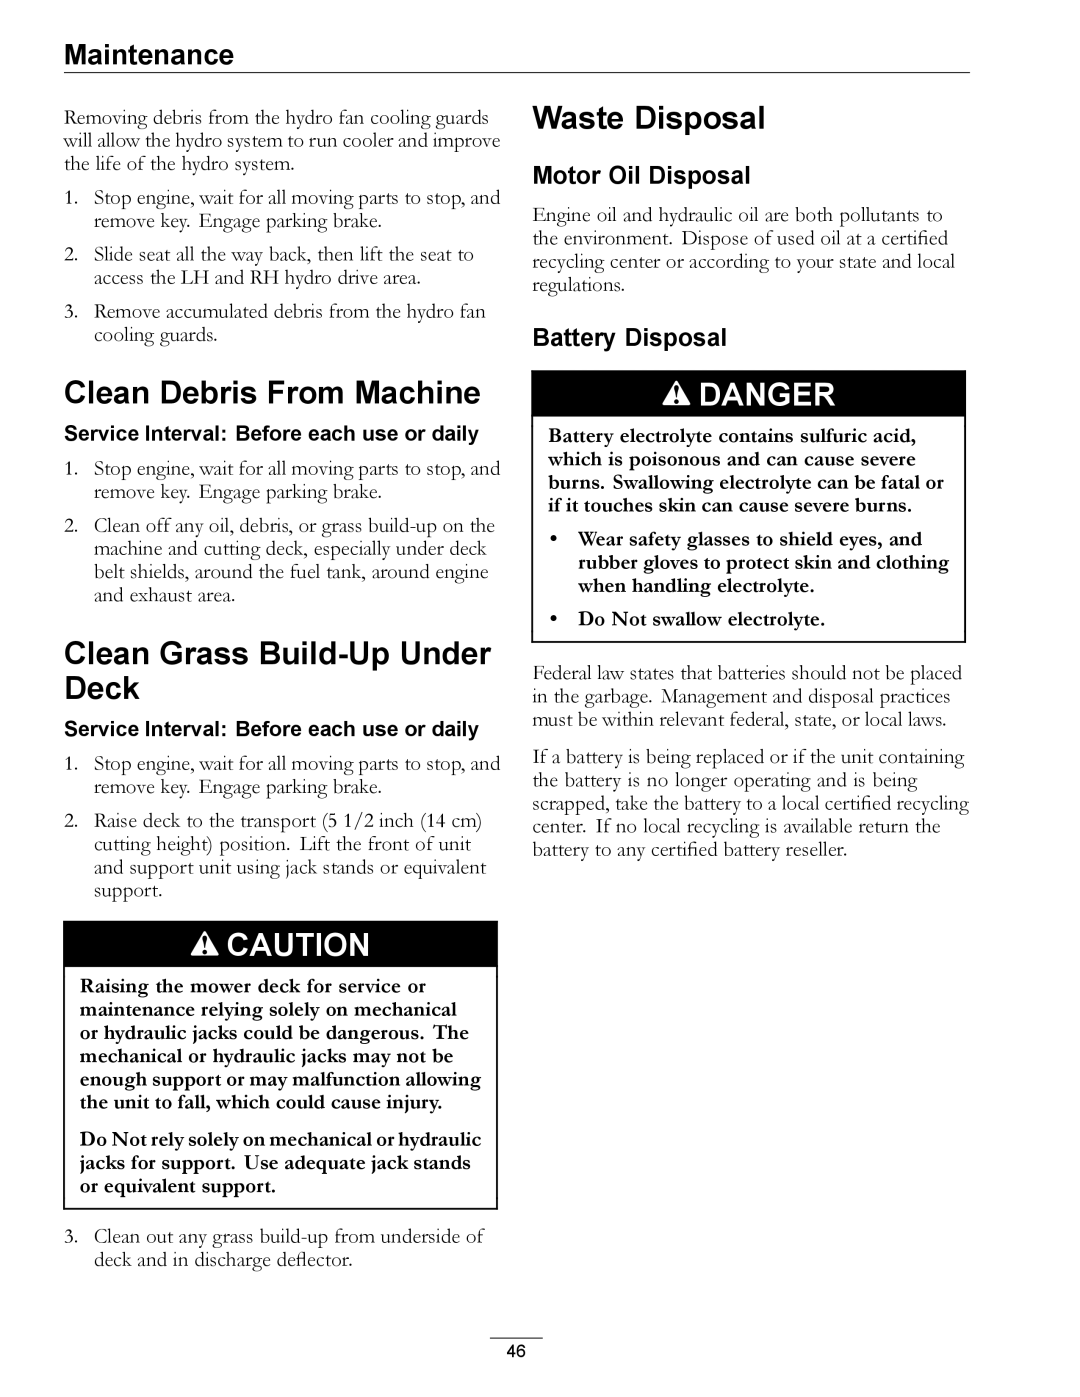 Exmark 4500-466 manual Waste Disposal, Clean Debris From Machine, Clean Grass Build-Up Under Deck, Motor Oil Disposal 